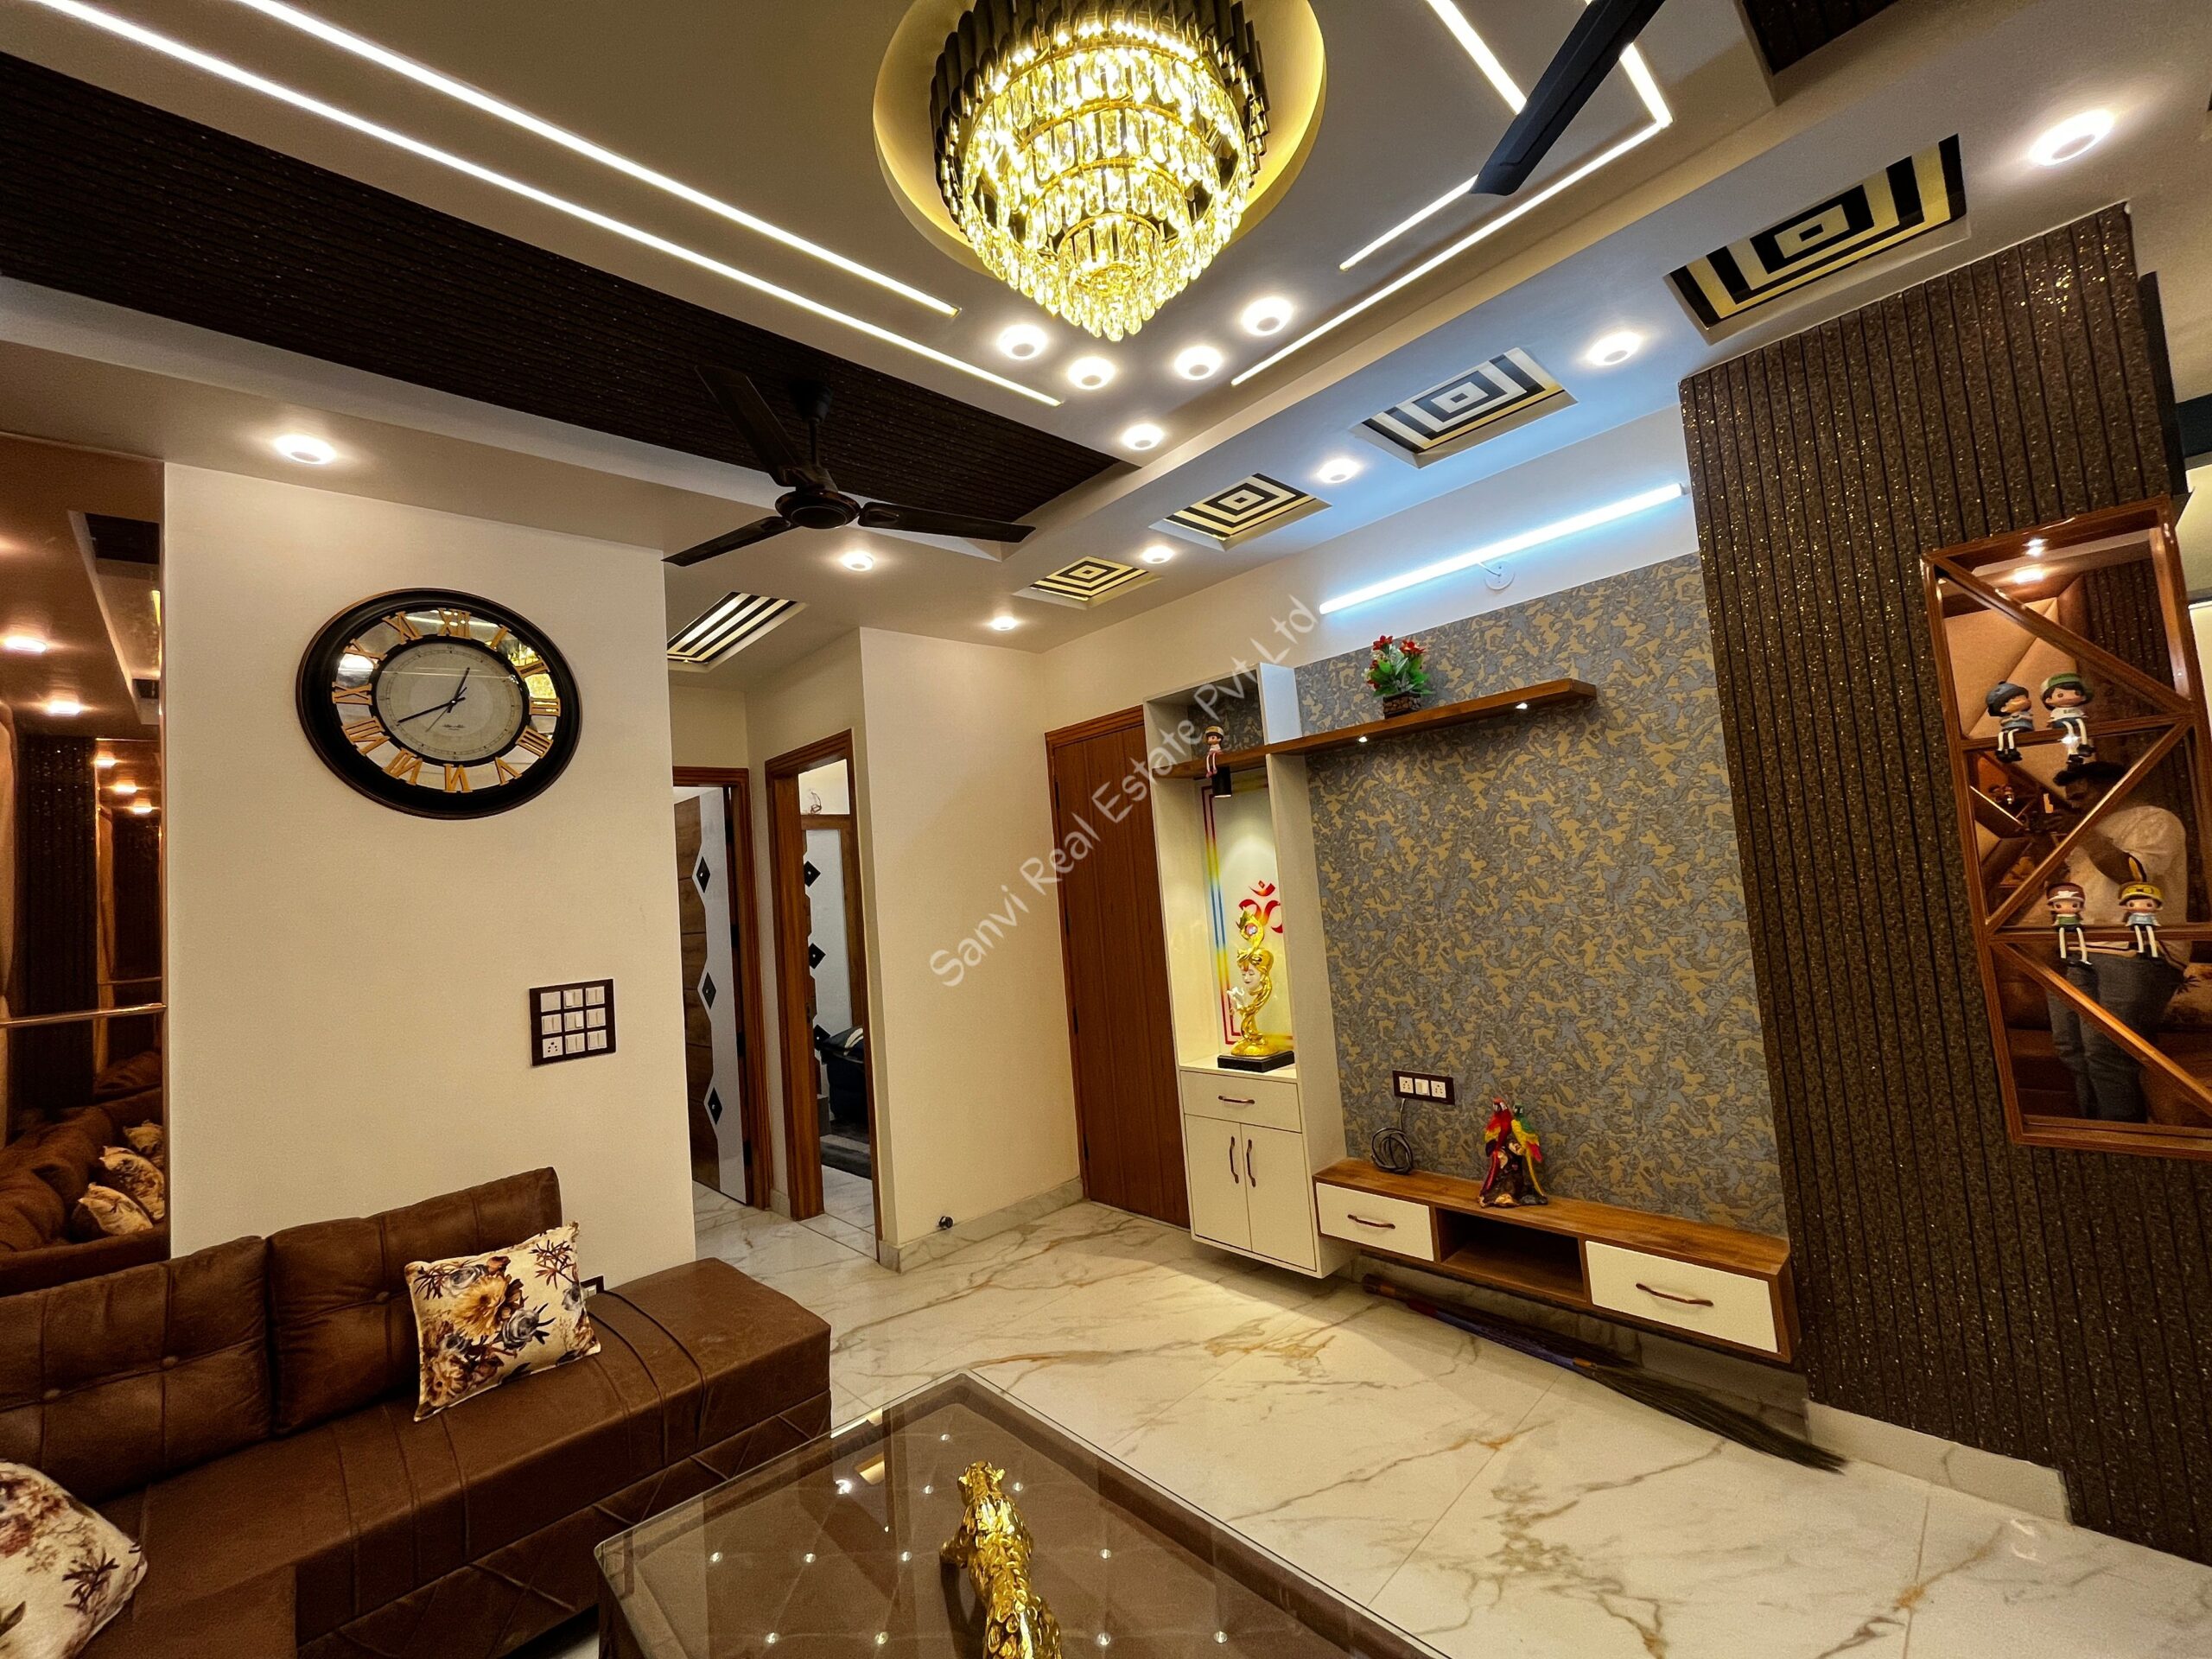 4 BHK Flat in Dwarka Mor | Premium Property on Sale | Sanvi Real Estate